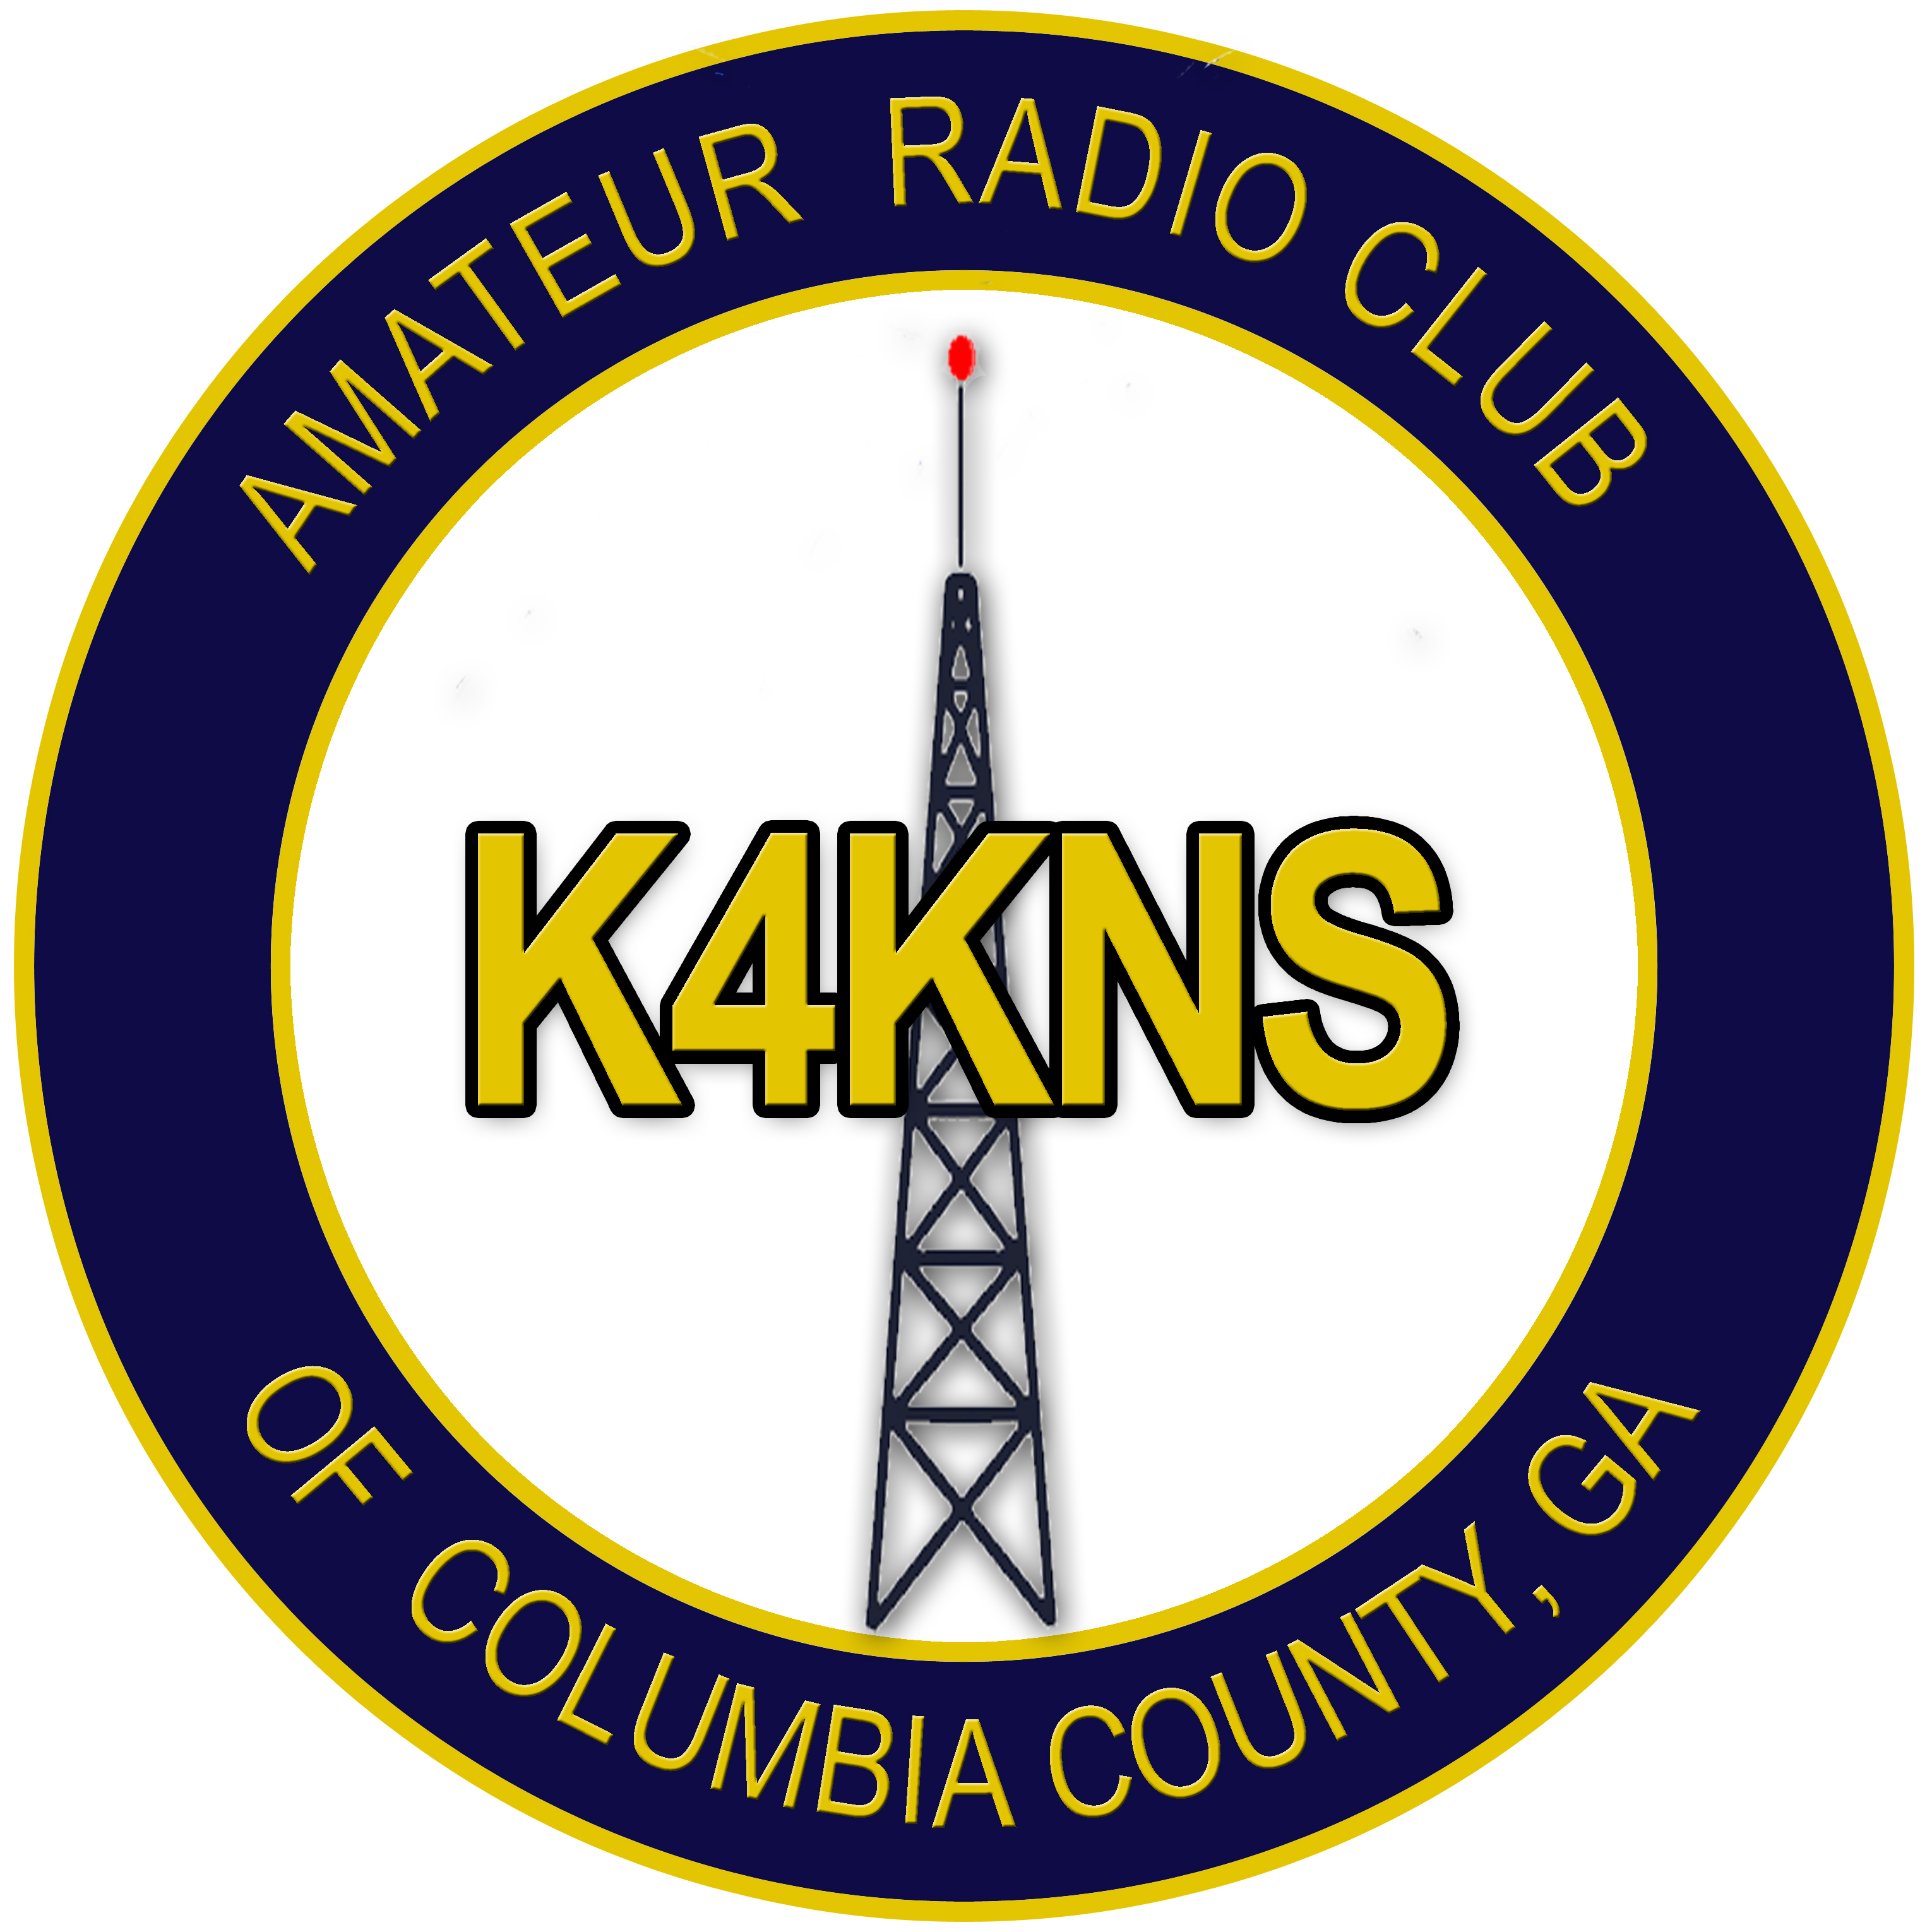 ARRL Clubs - Amateur Radio Club of Columbia County